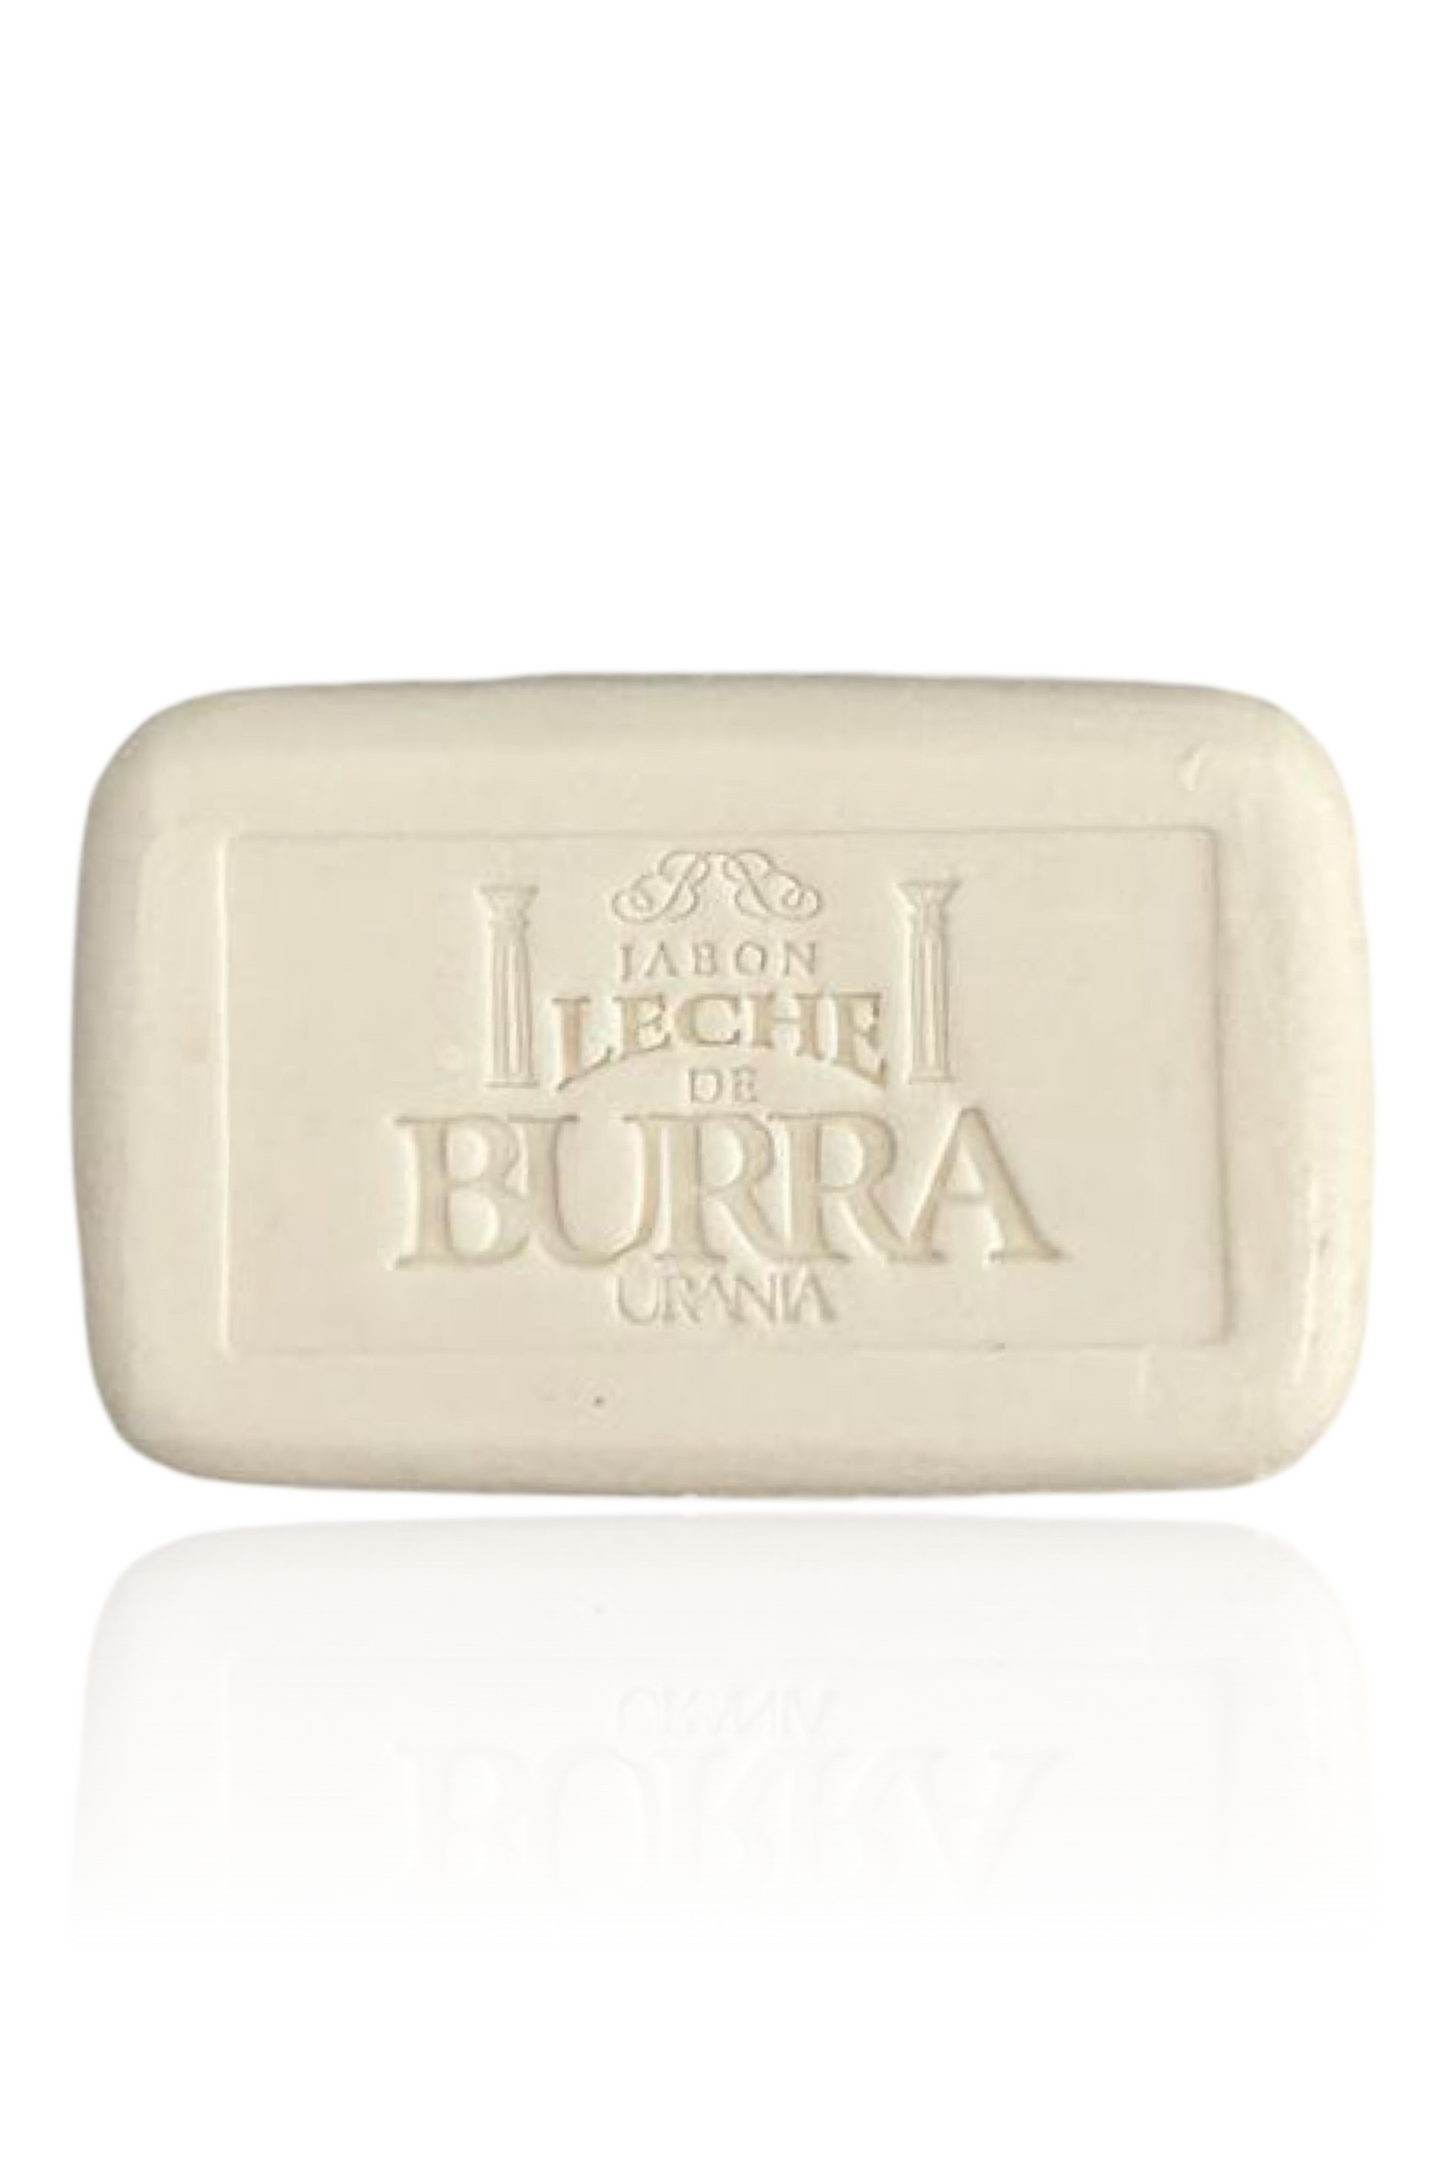 Jabon Leche De Burra/Body Cream Soap 90 g